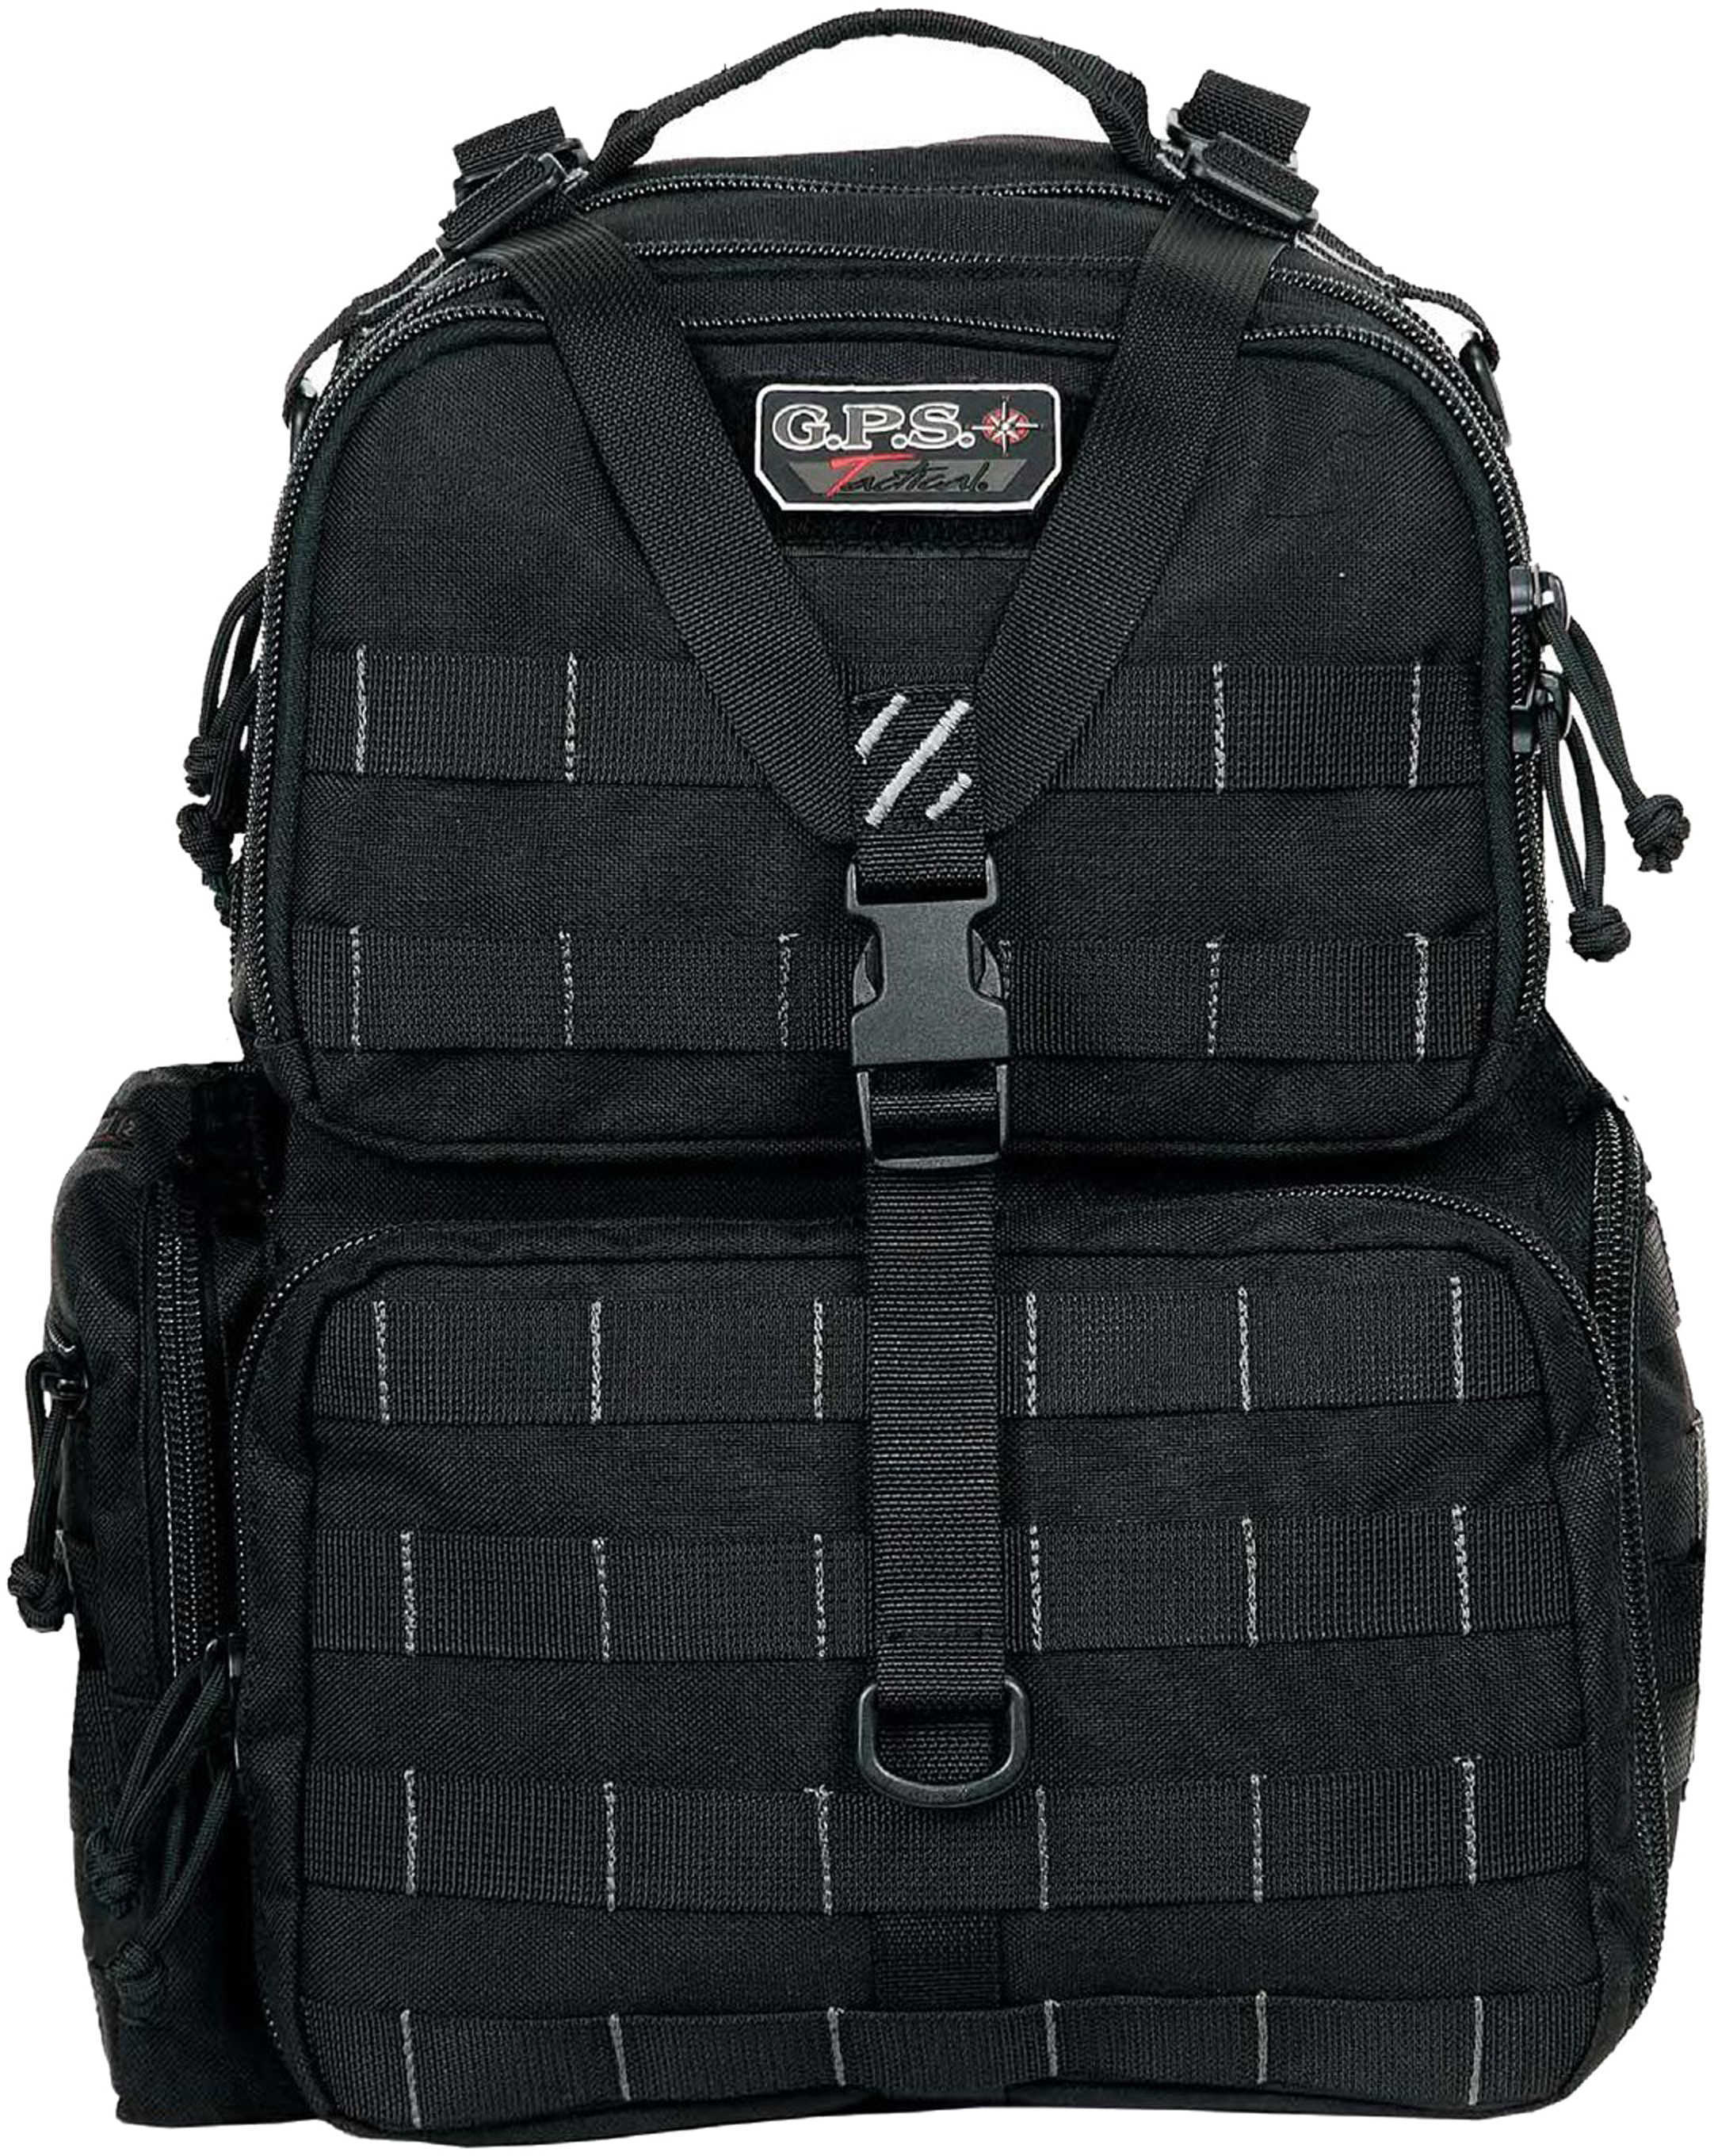 G.P.S. Tactical Range Backpack Black GPS-T1612BPB